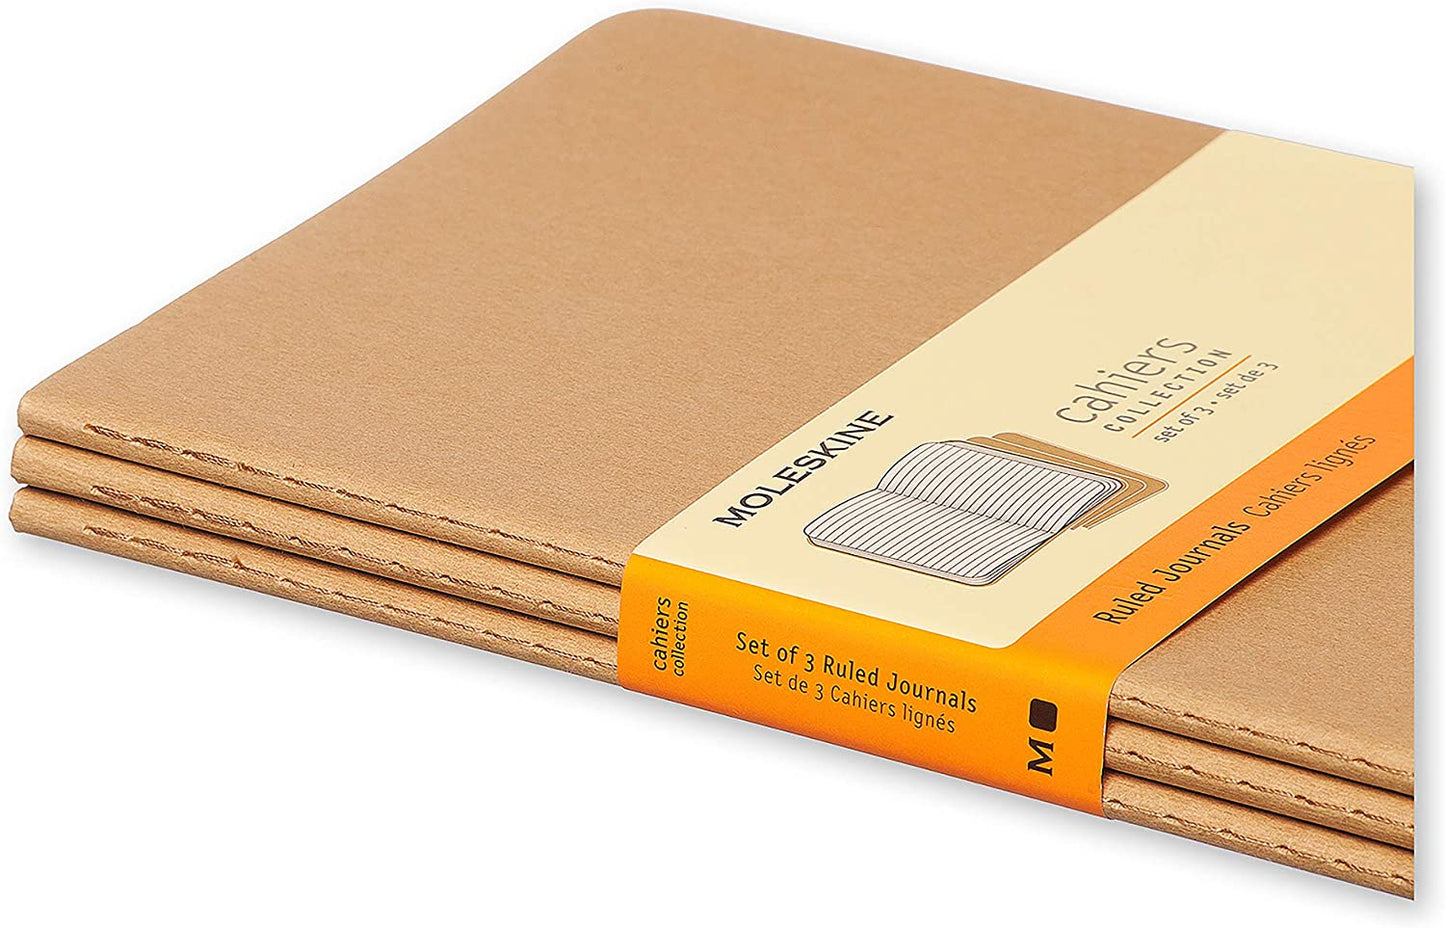 Moleskine Cahiers Journal - Set of 3 - Cardboard Cover